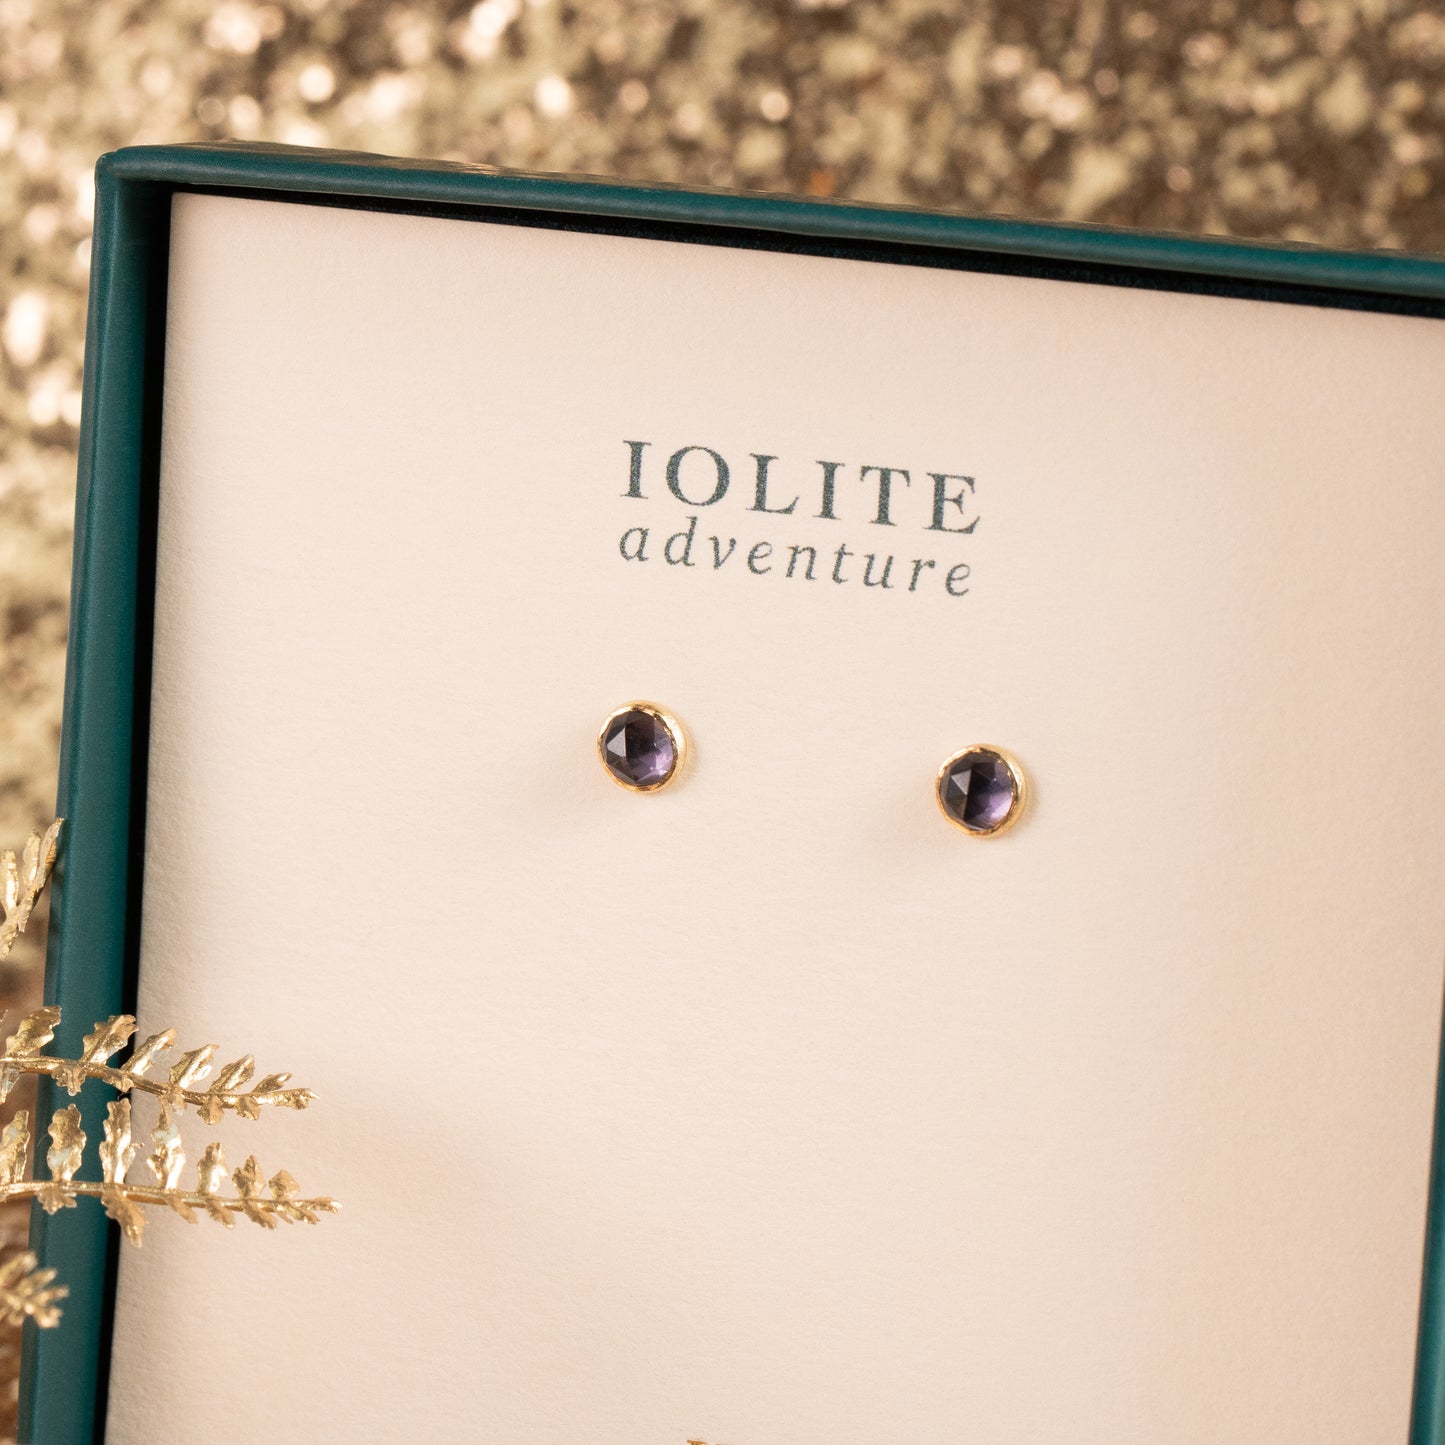 Iolite Earrings - Adventure - Silver & Gold